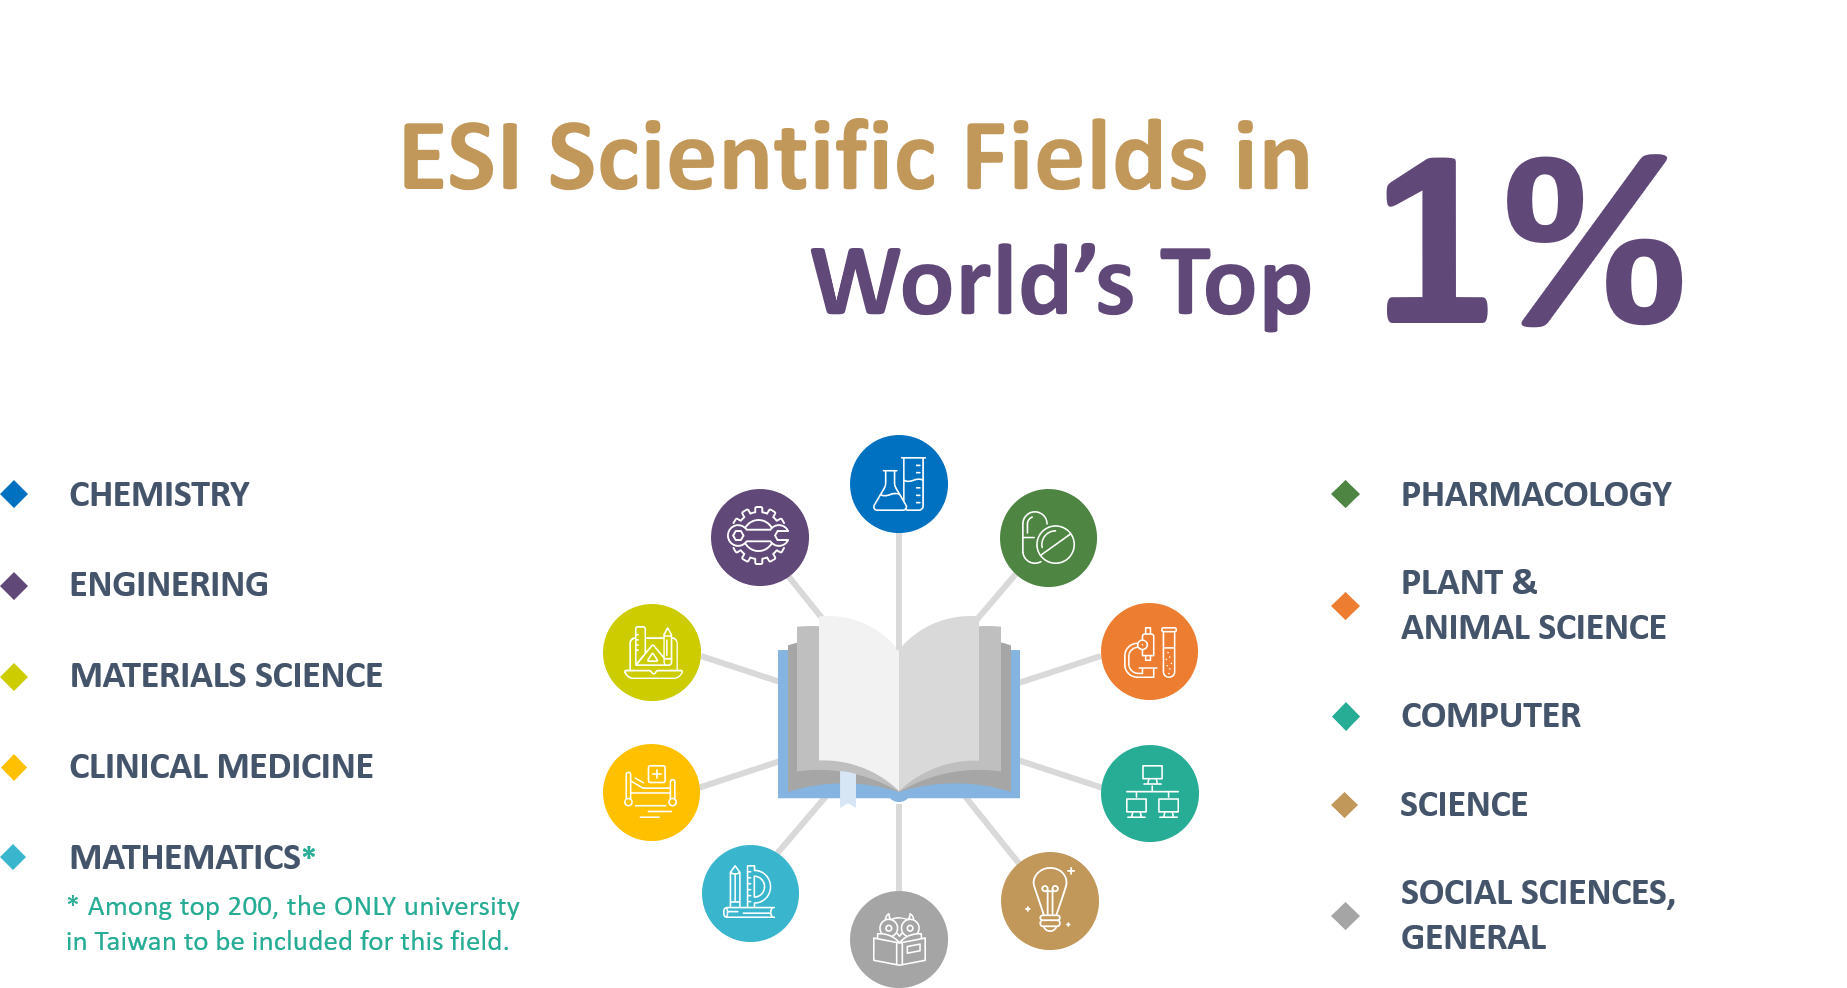 ESI Scientific Fields in World’s Top 1%